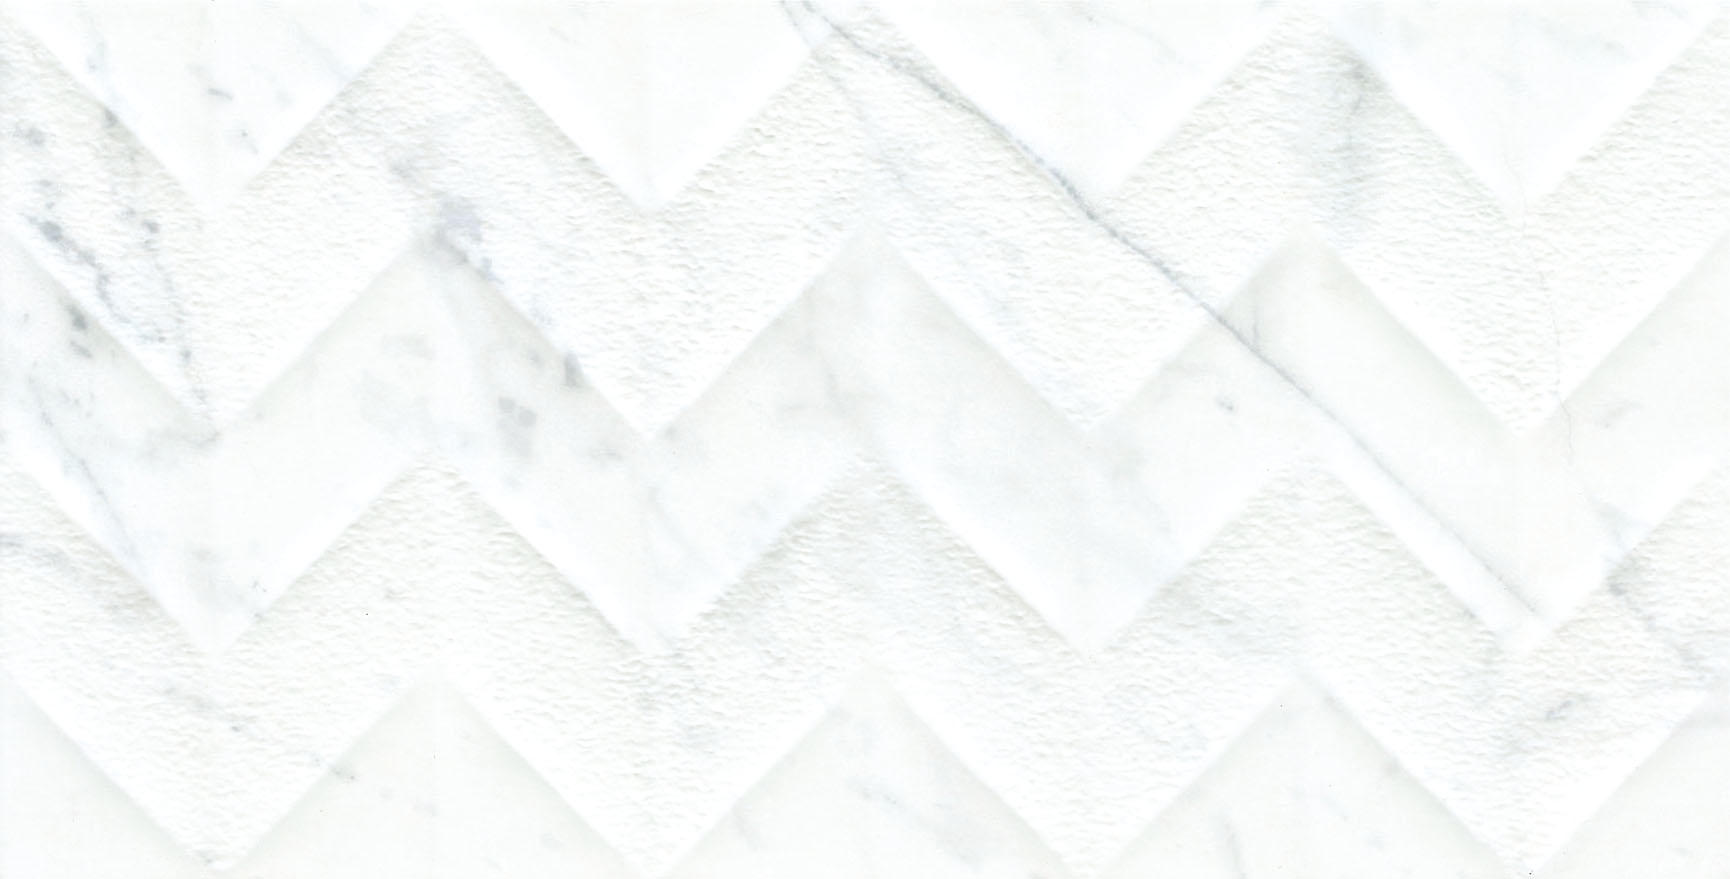 LONGFAVOR white 300x600mm Ceramic Wall Tile oem Coffee Bars